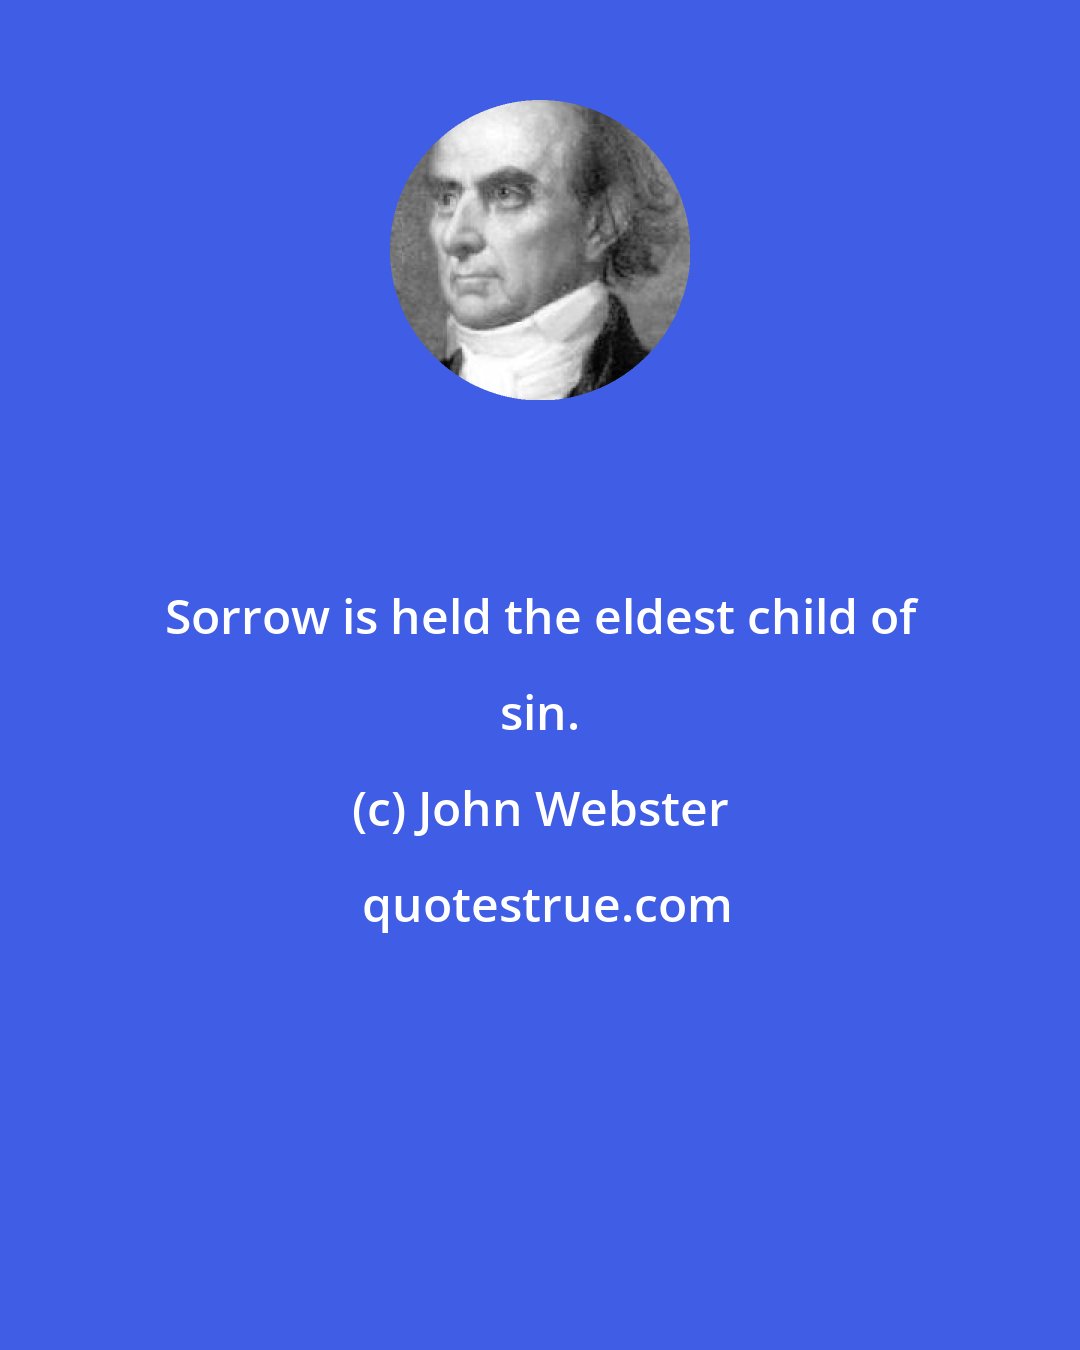 John Webster: Sorrow is held the eldest child of sin.